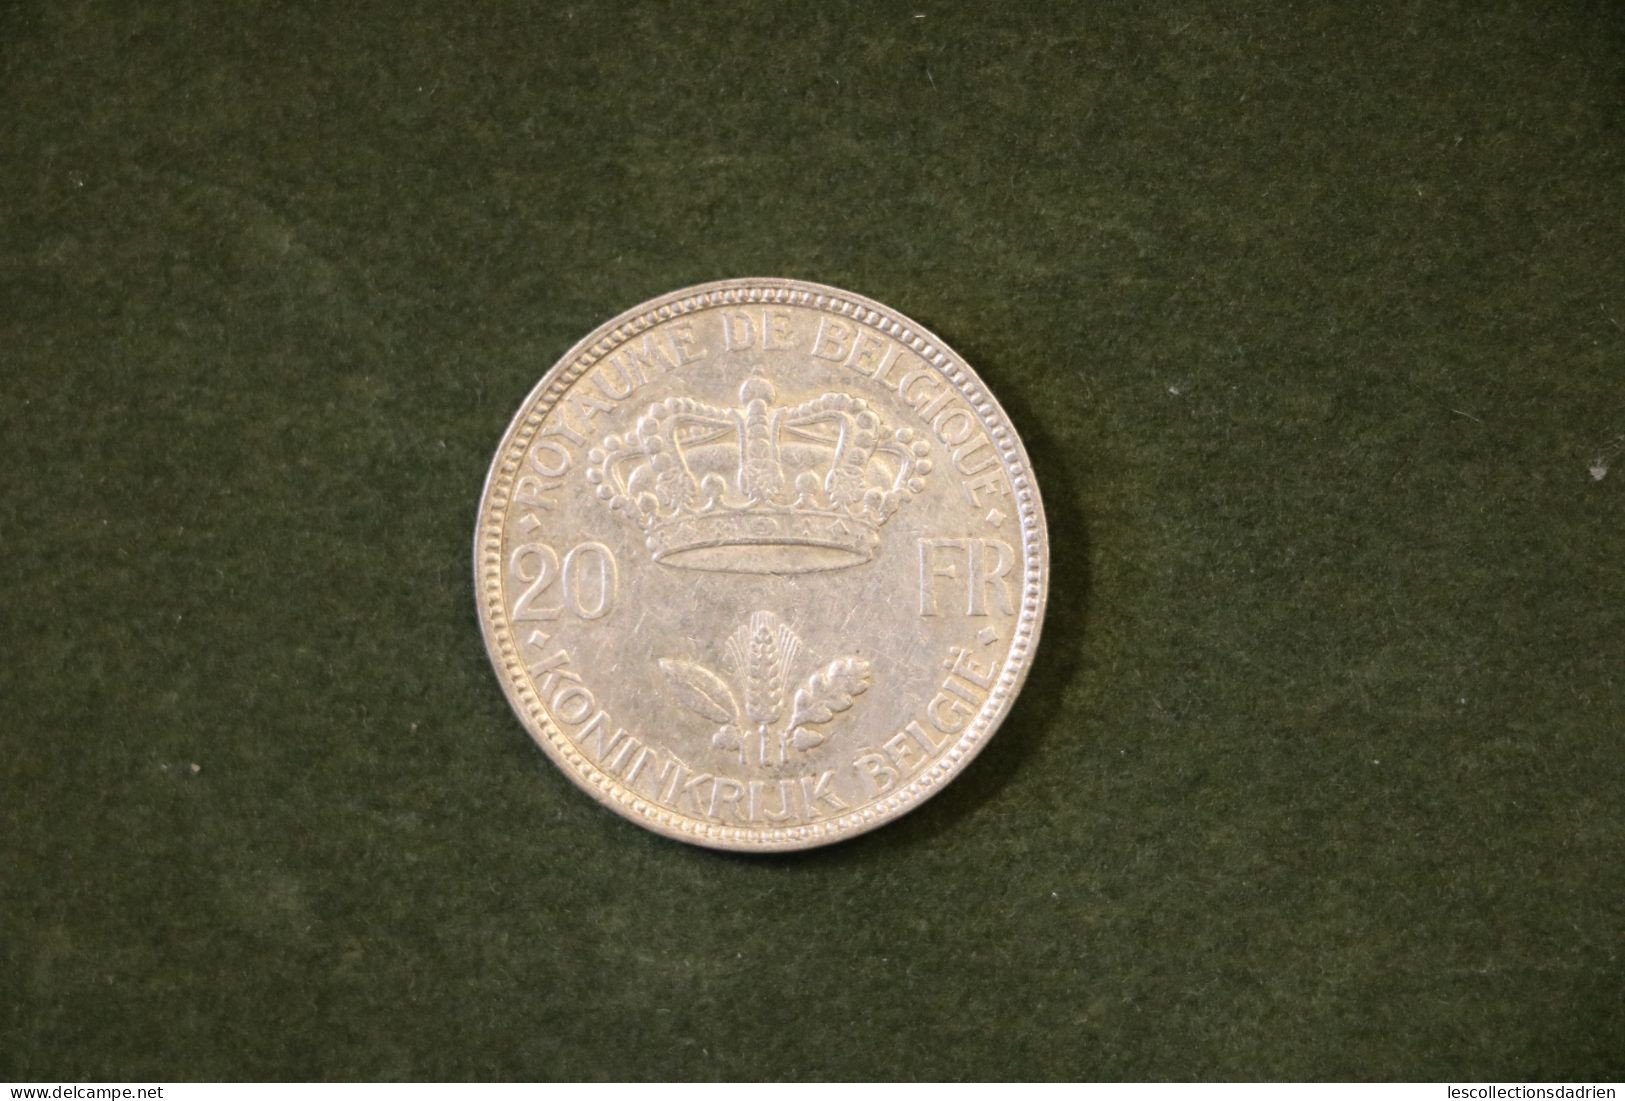 20 Fr Léopold III Argent 1935 - Belgian Silver Coin - 20 Francs